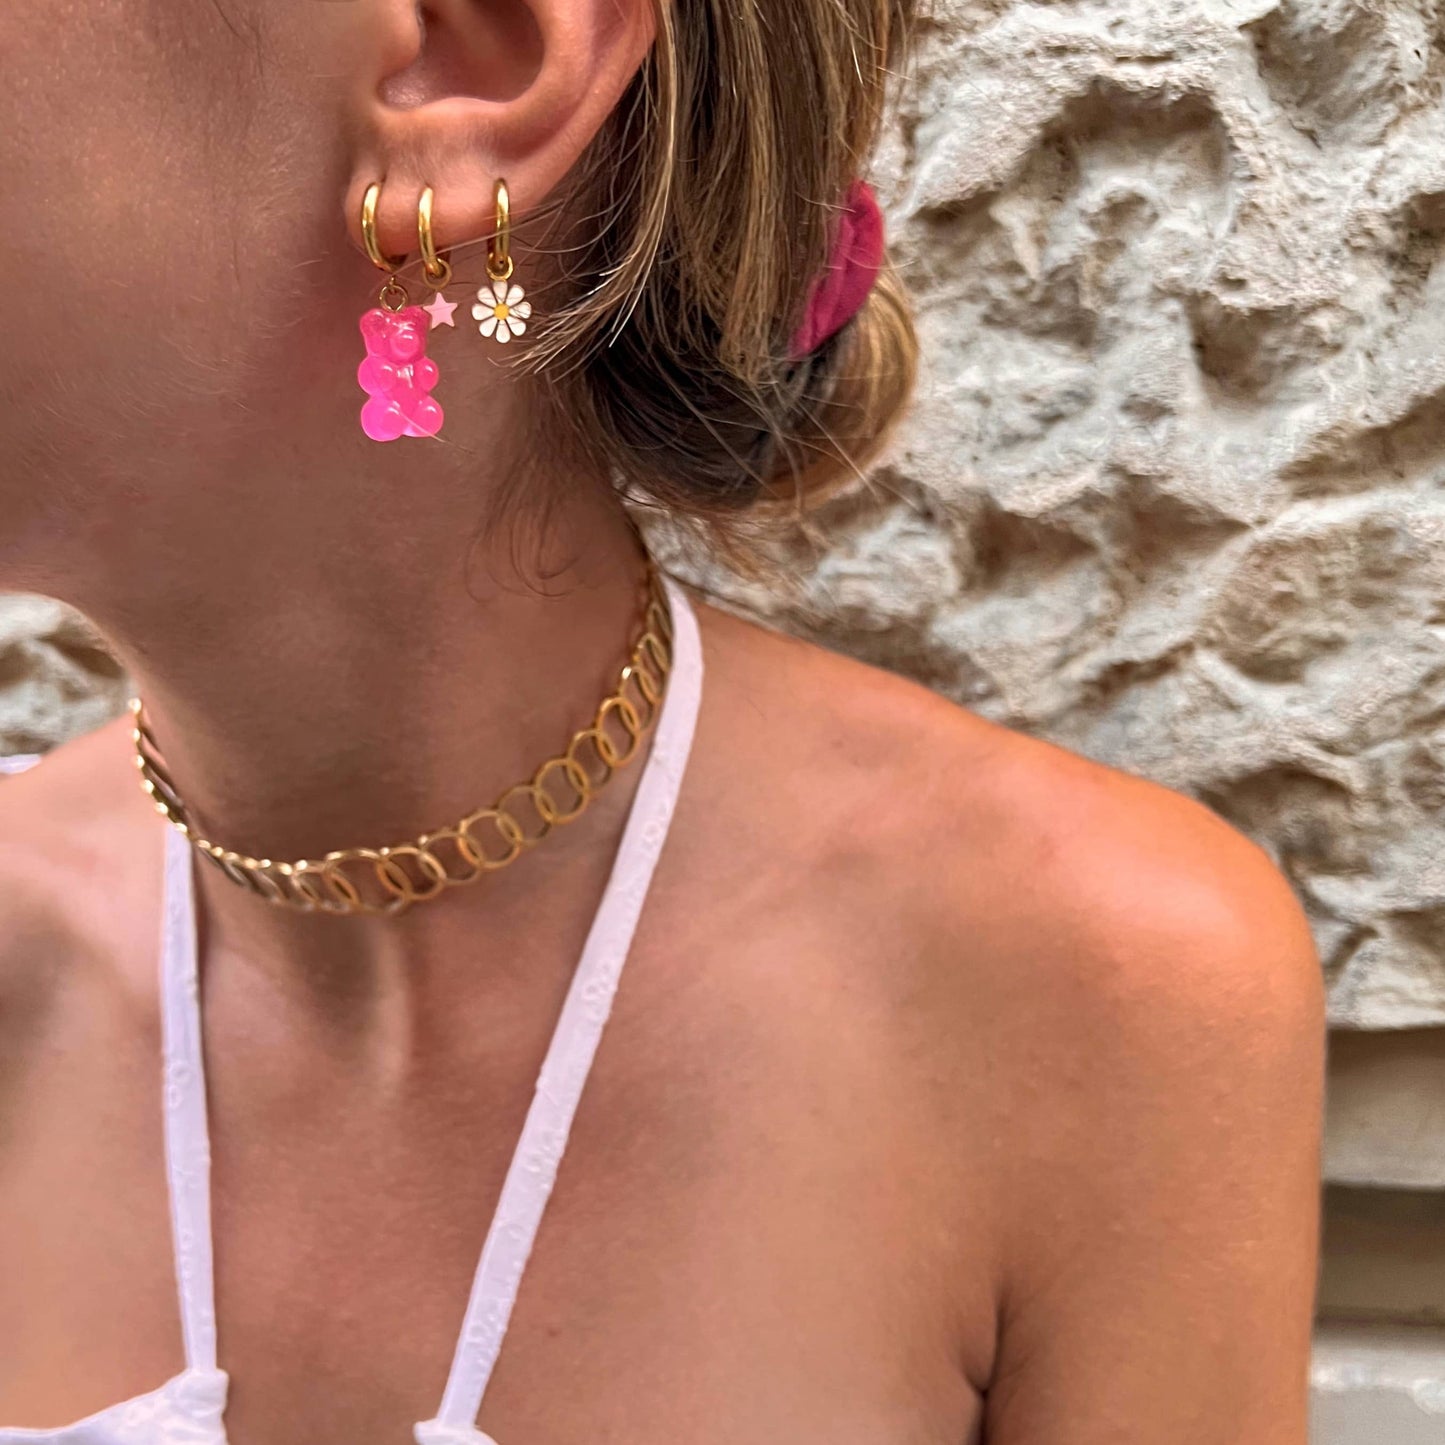 Pink star earrings